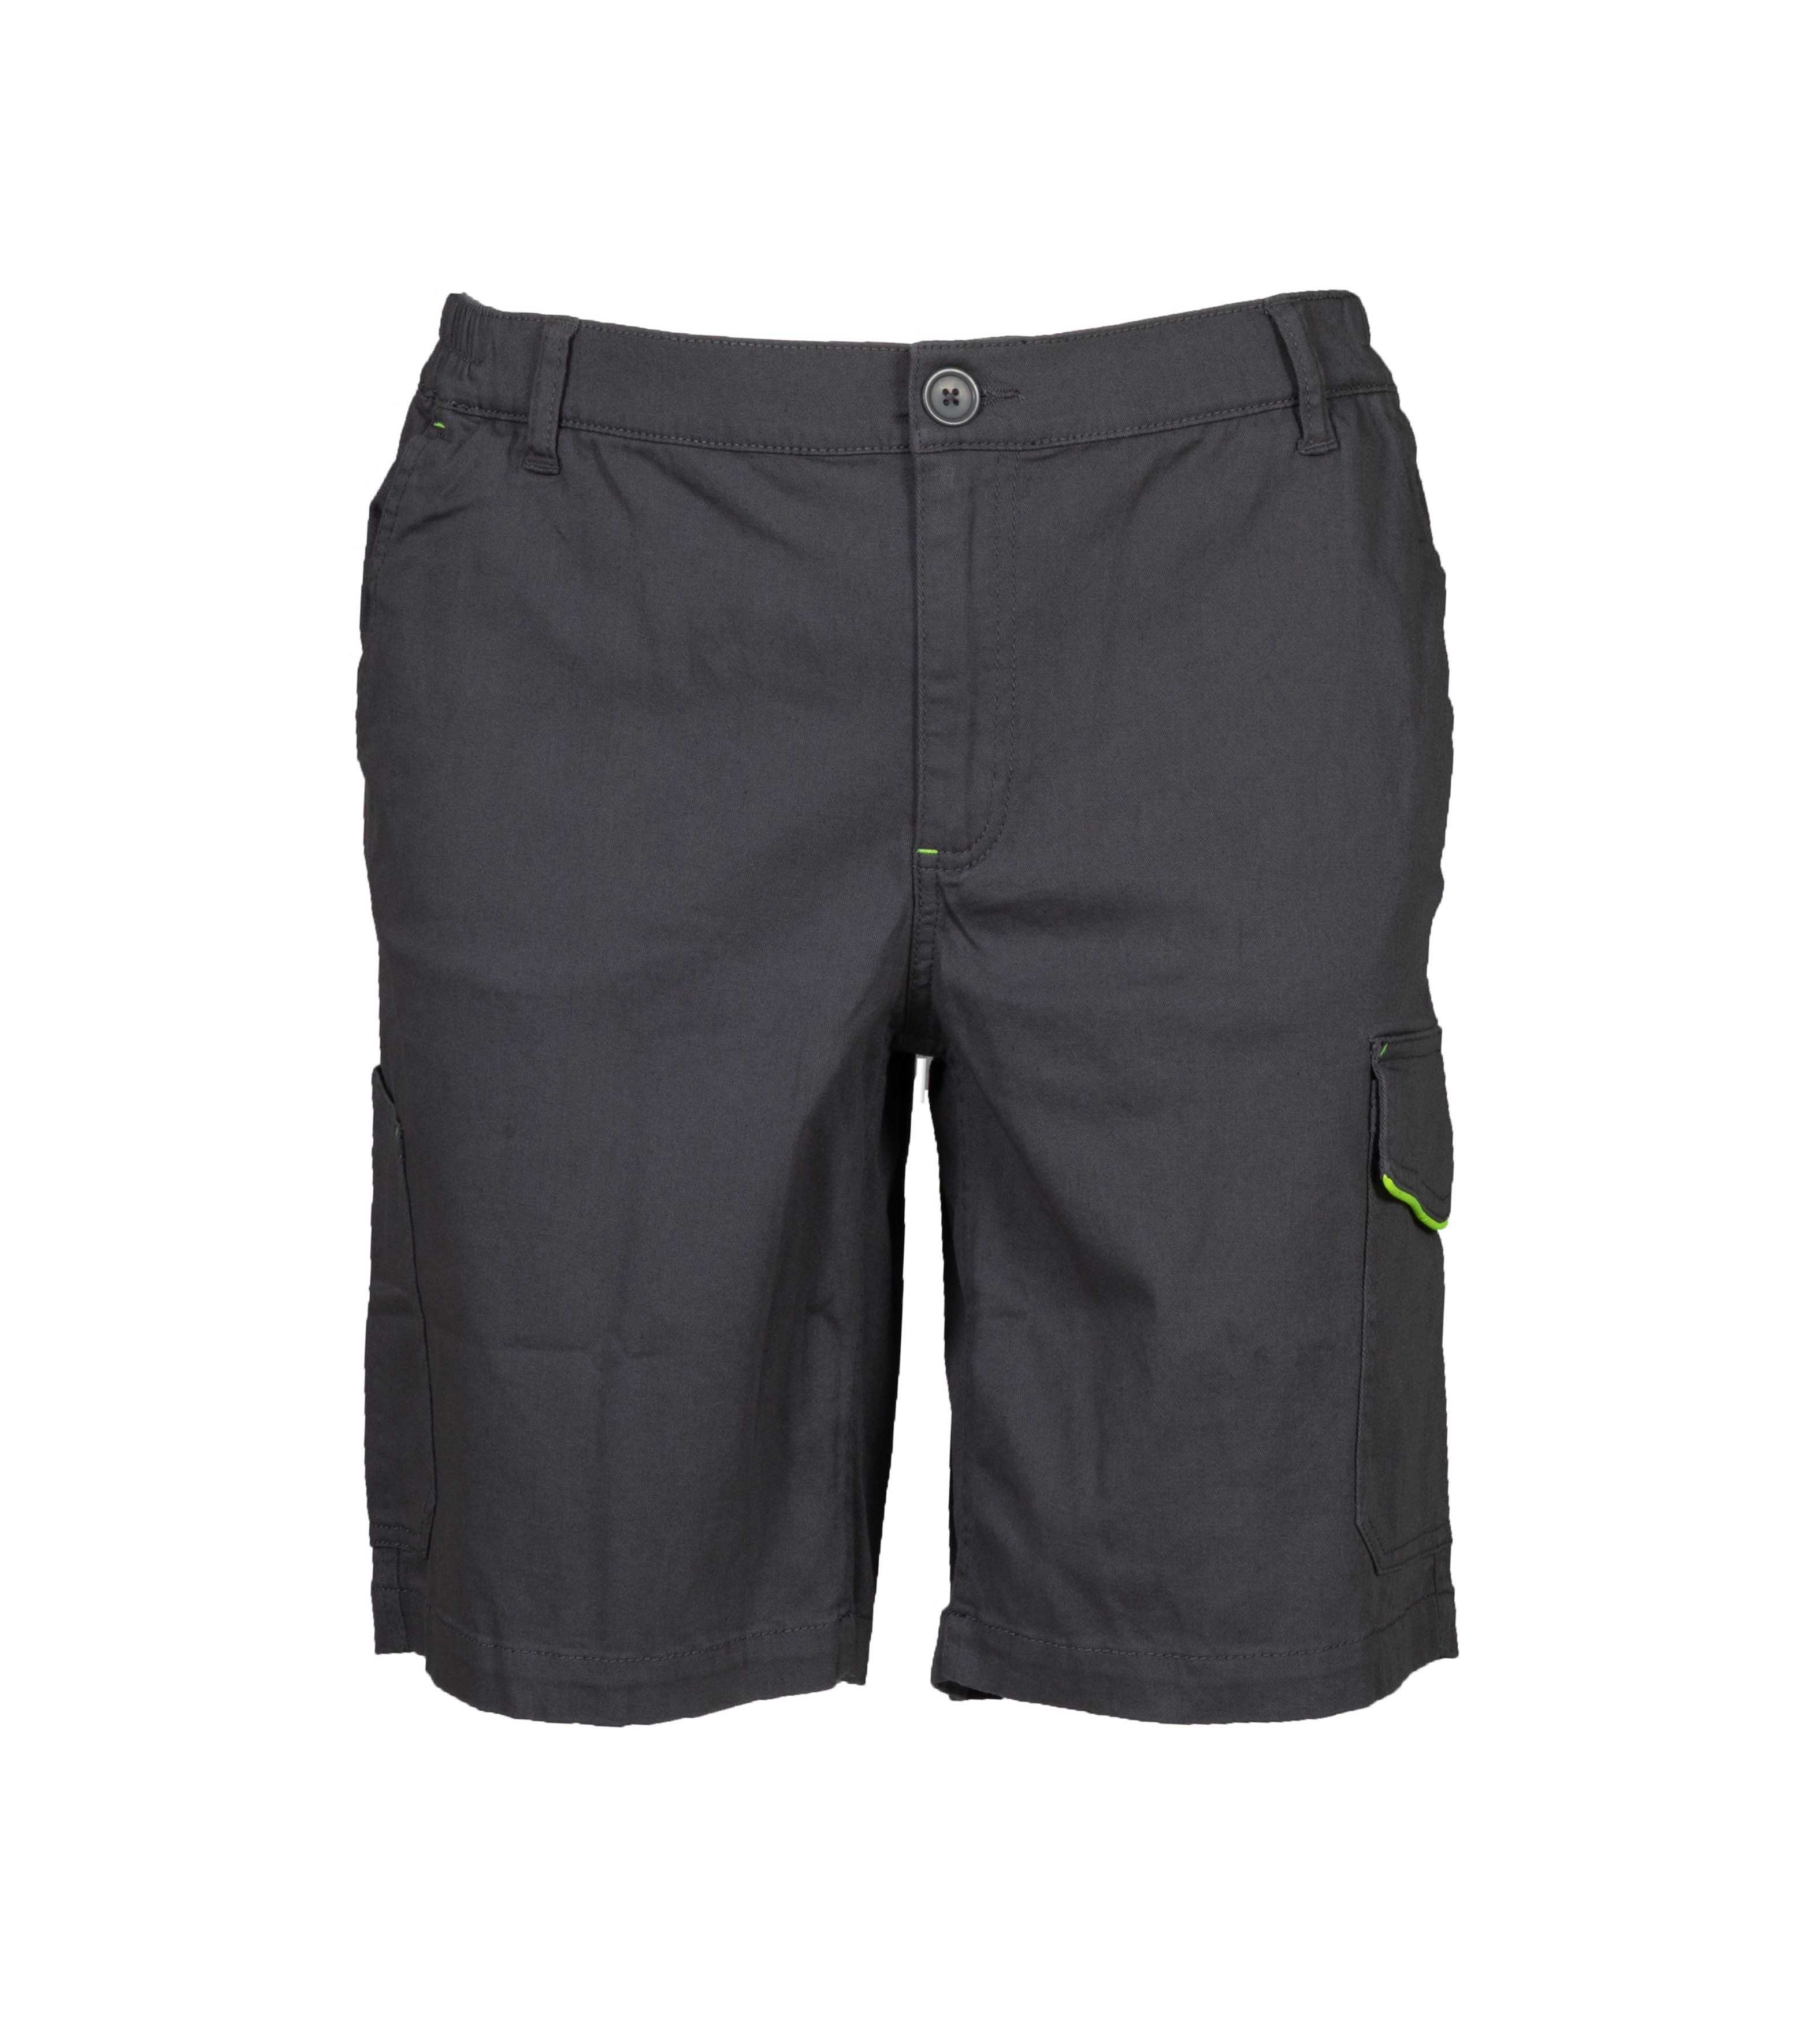 Pantalòn Zurigo Shorts